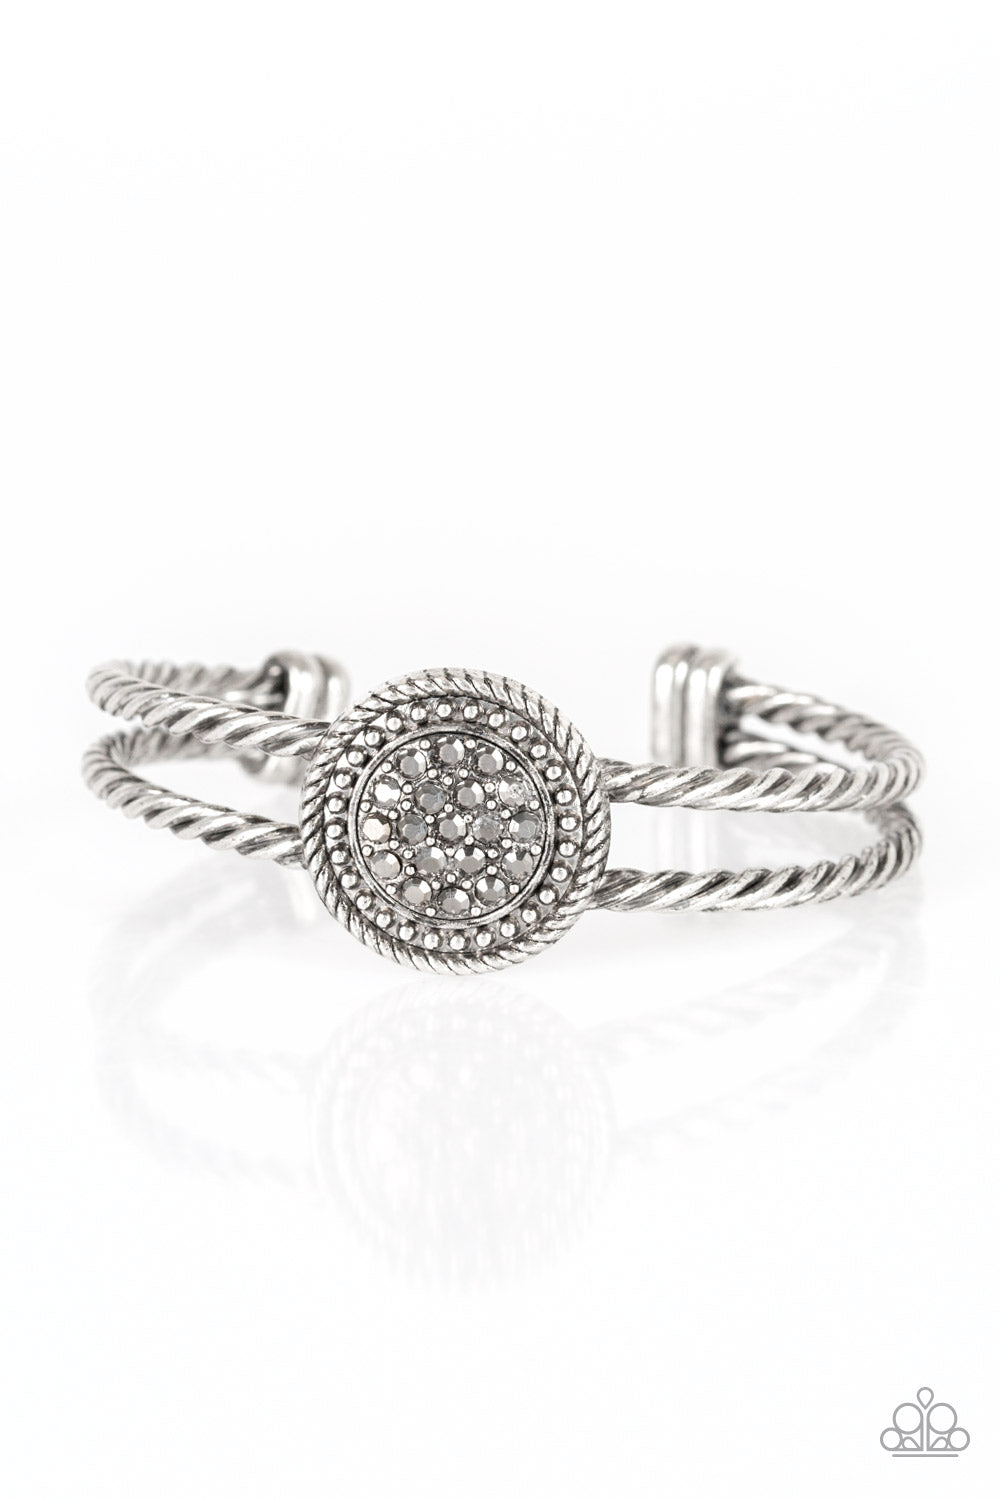 Definitely Dazzling - Silver Bracelet